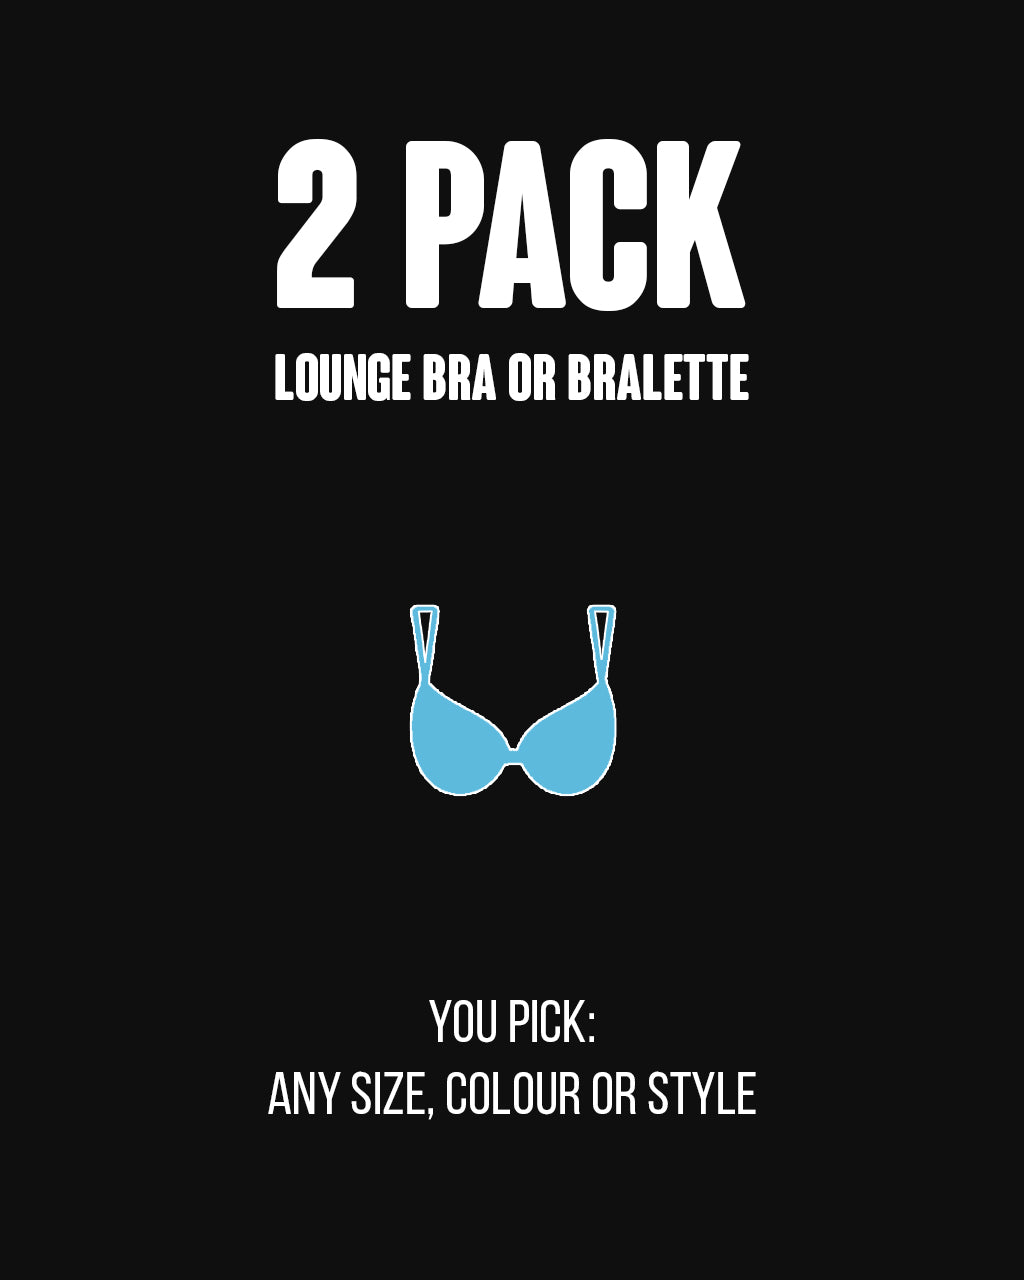 2 Pack Bralette or Lounge Bra